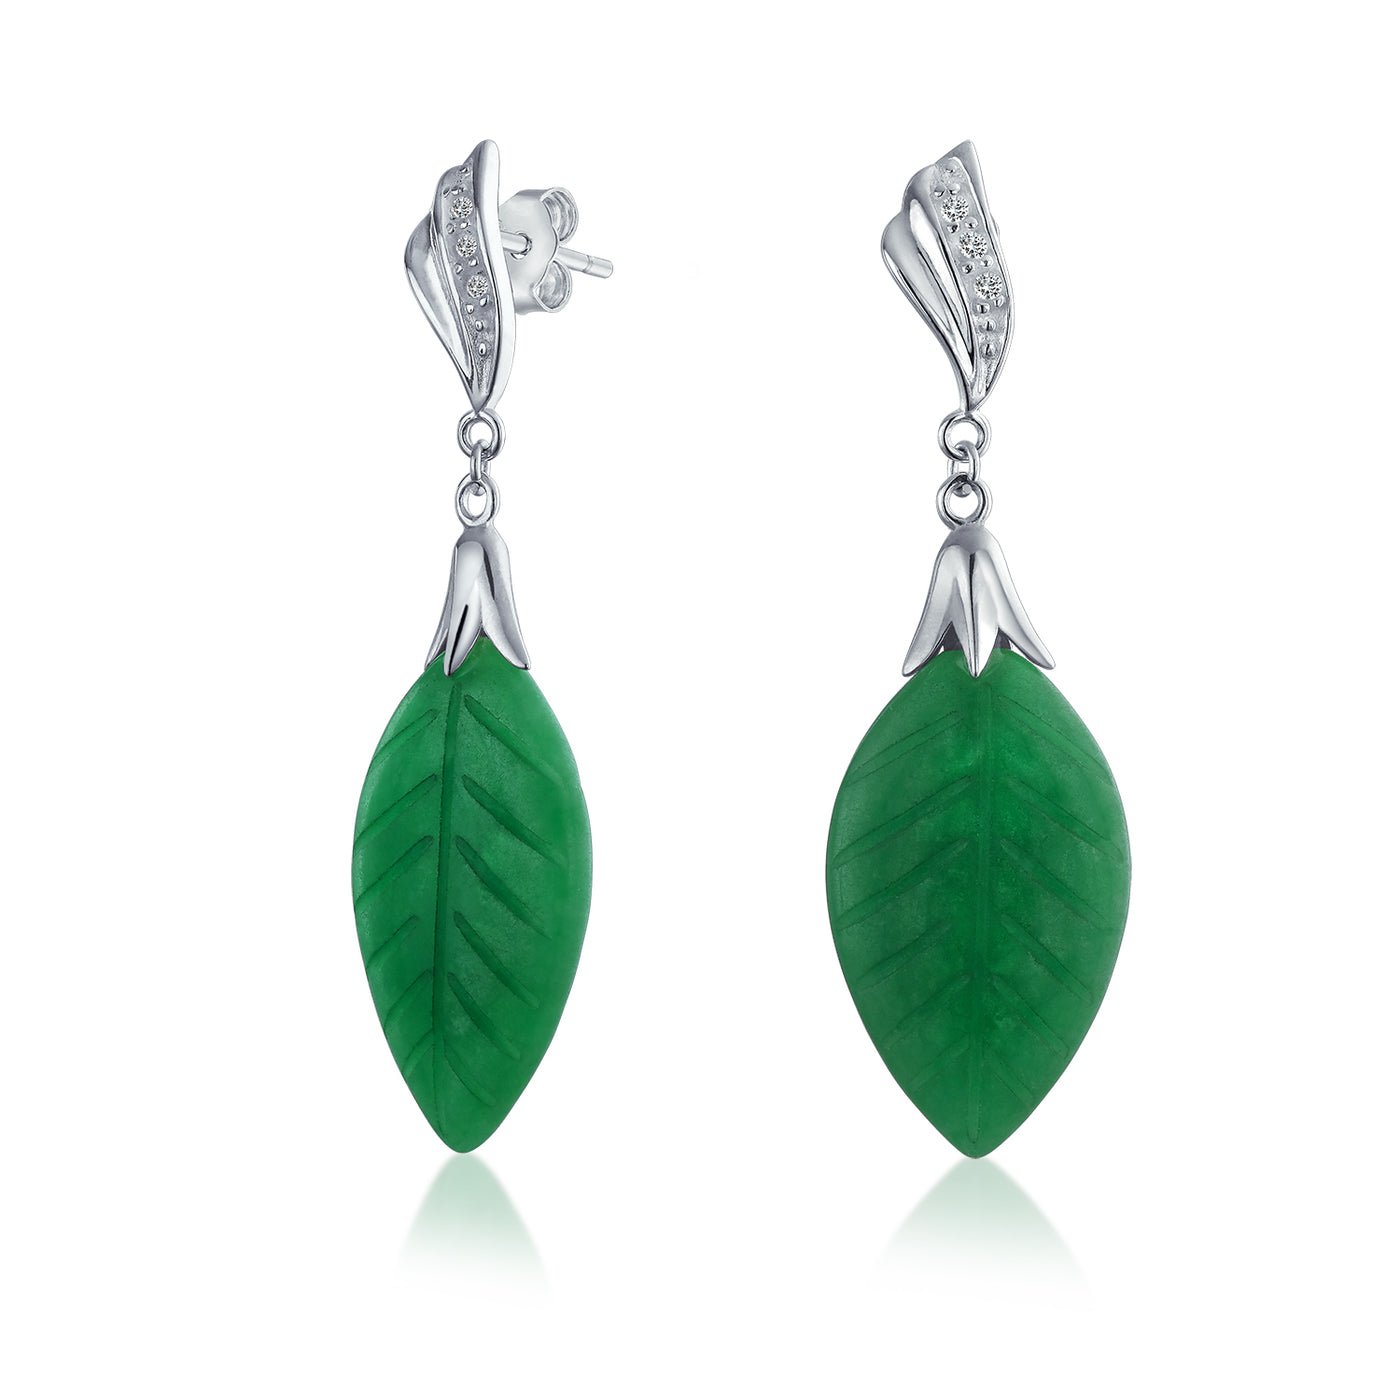 Western Jewelry Carved Leaf Green Jade Drop Earrings Sterling Silver